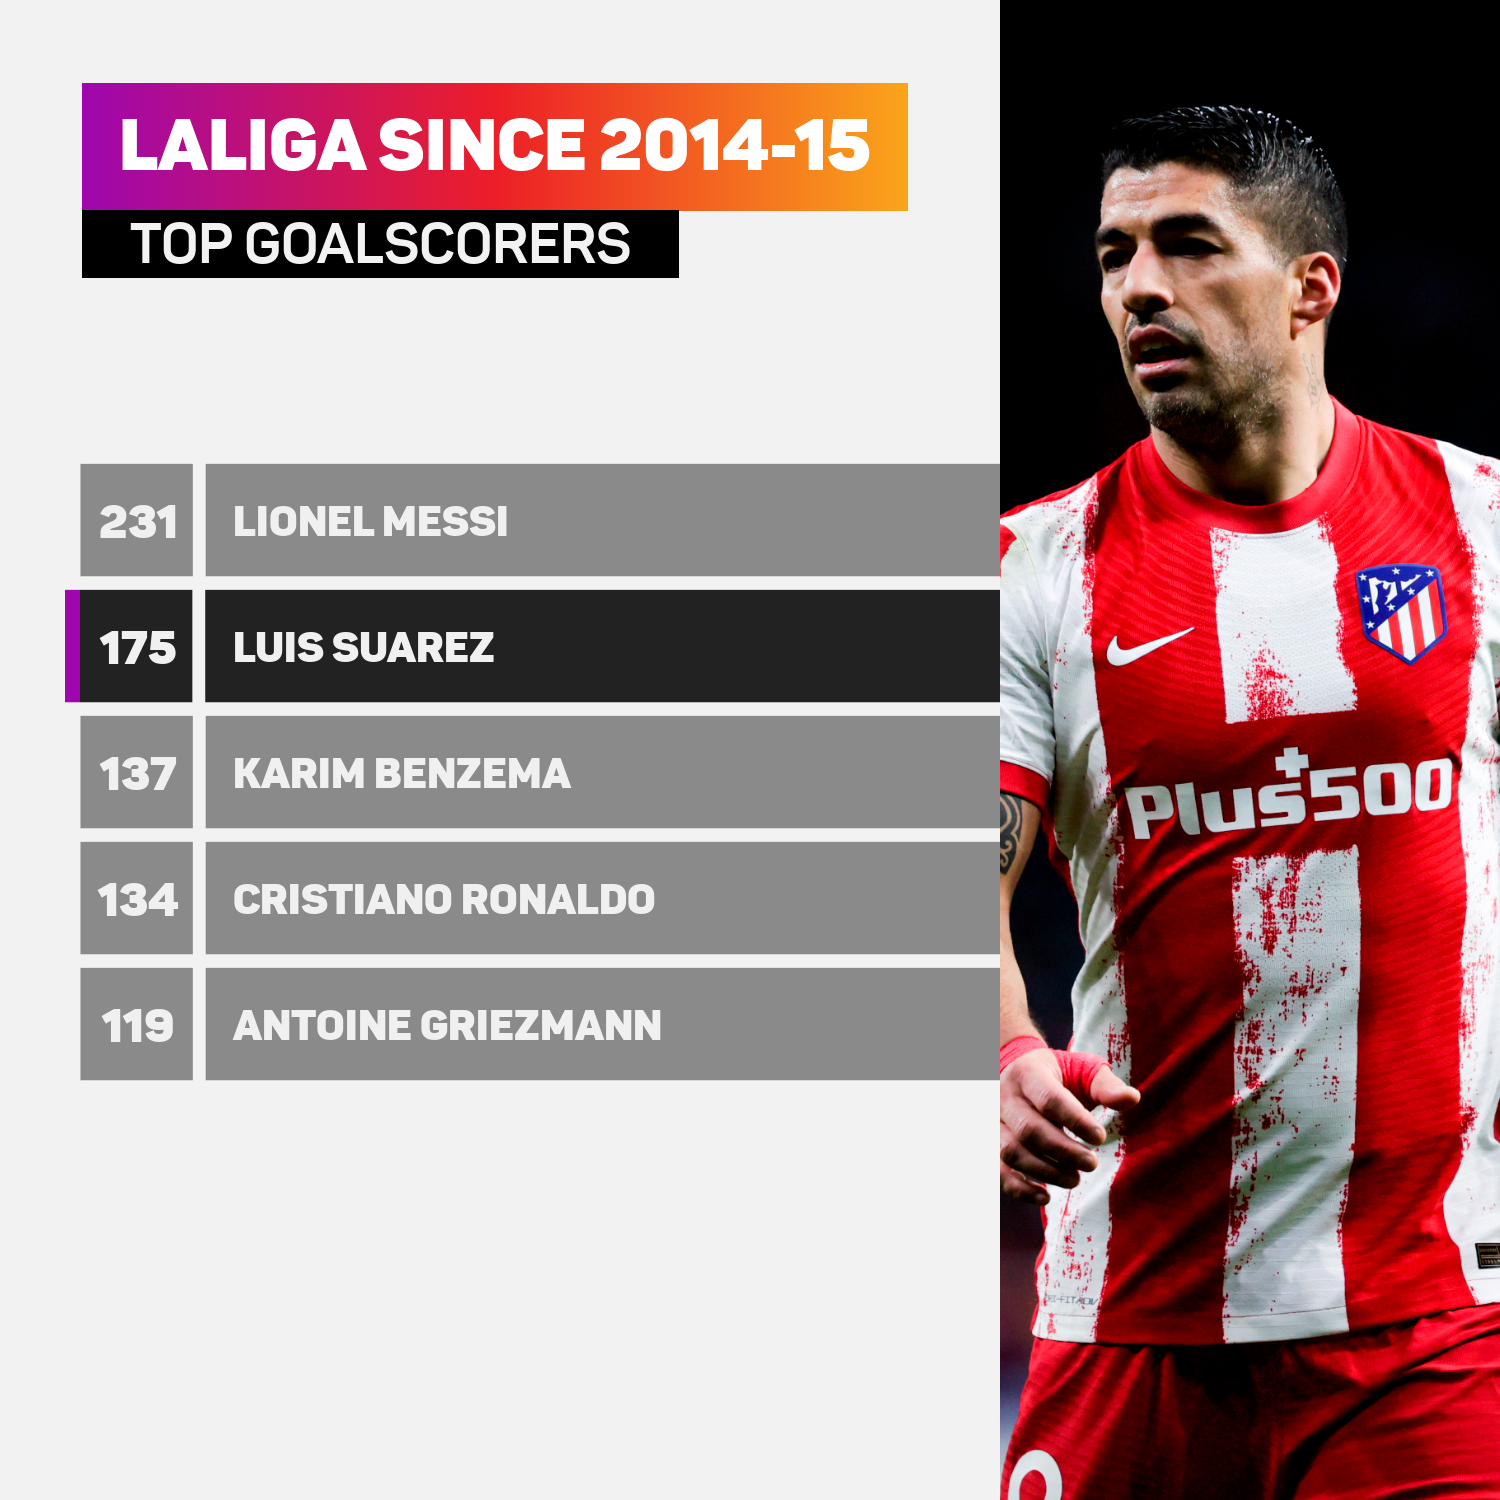 LaLiga top scorers since 2014-15